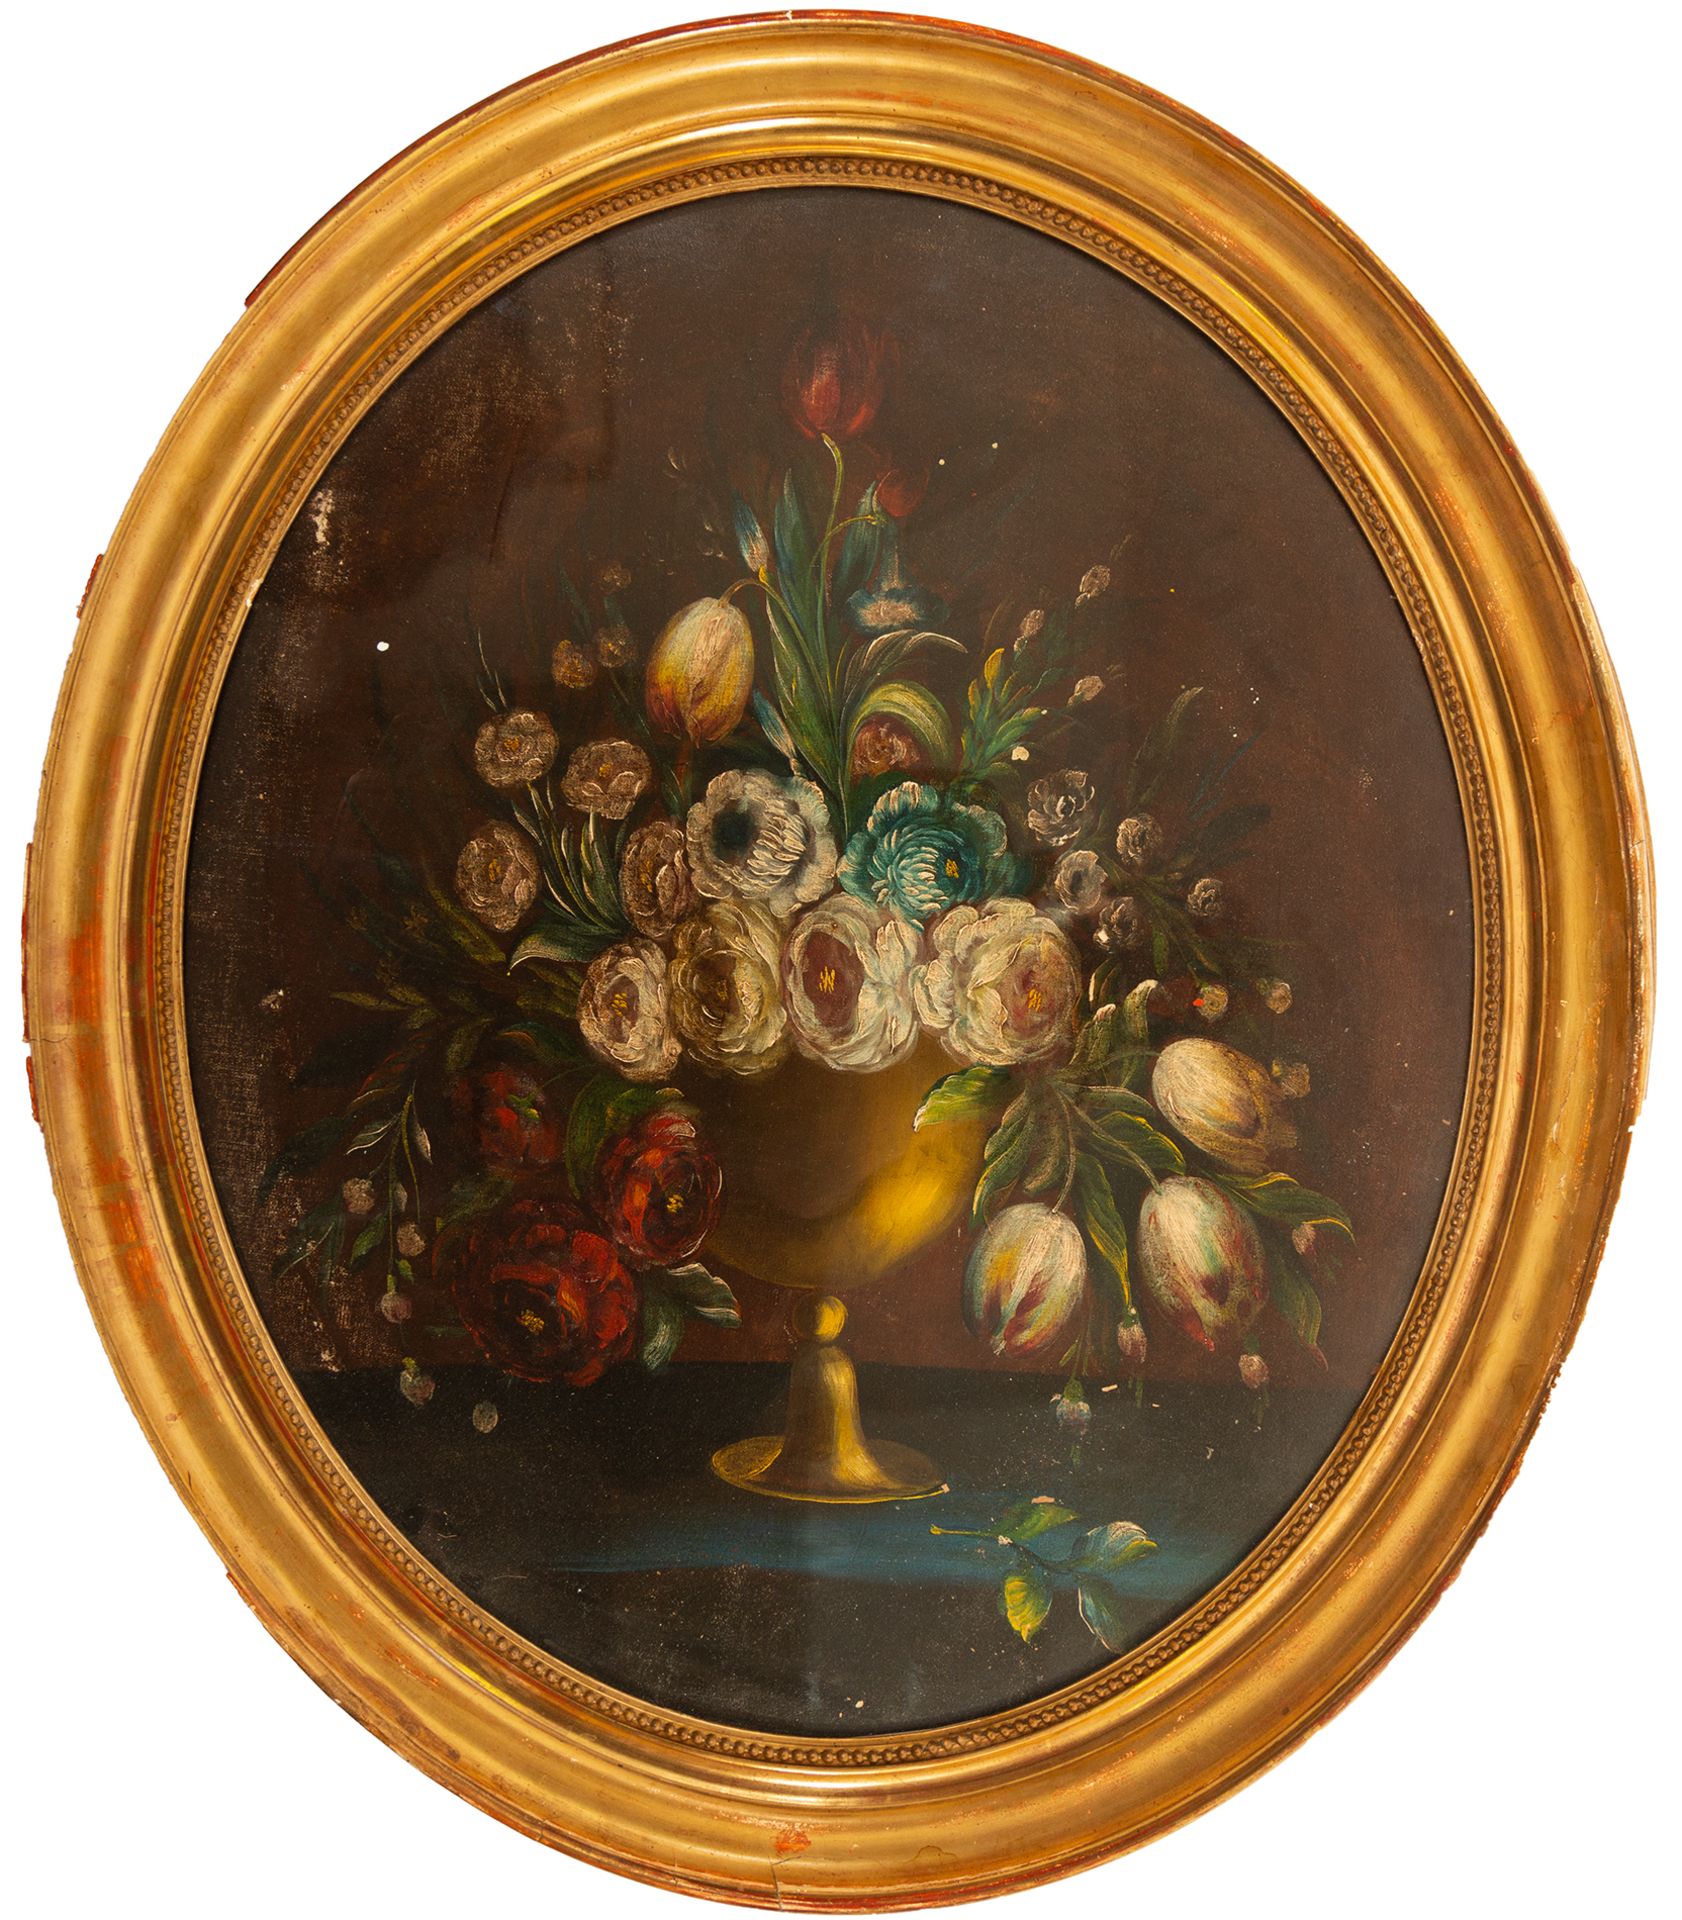 Pair of Oval Vases, 19th century Italian school - Image 2 of 11